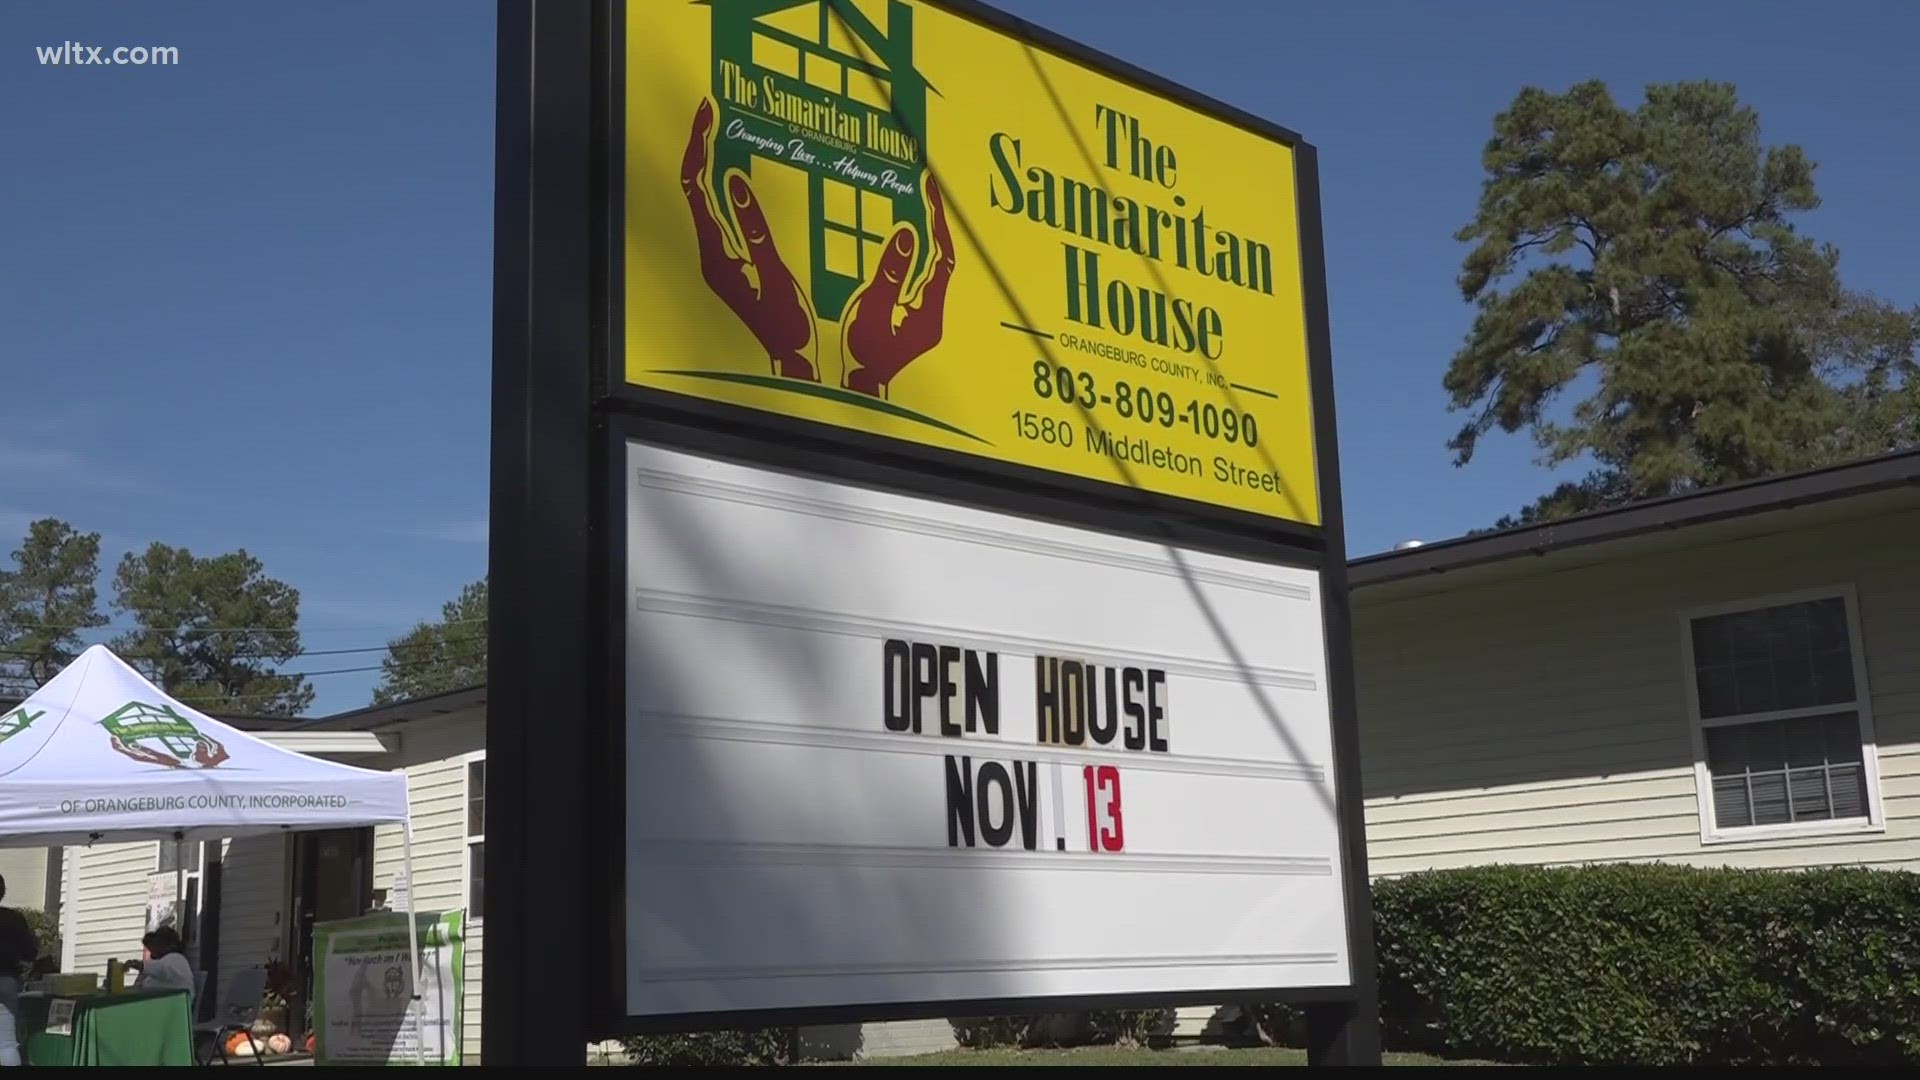 The Samaritan House of Orangeburg is celebrating their third anniversary after a reboot in 2020.